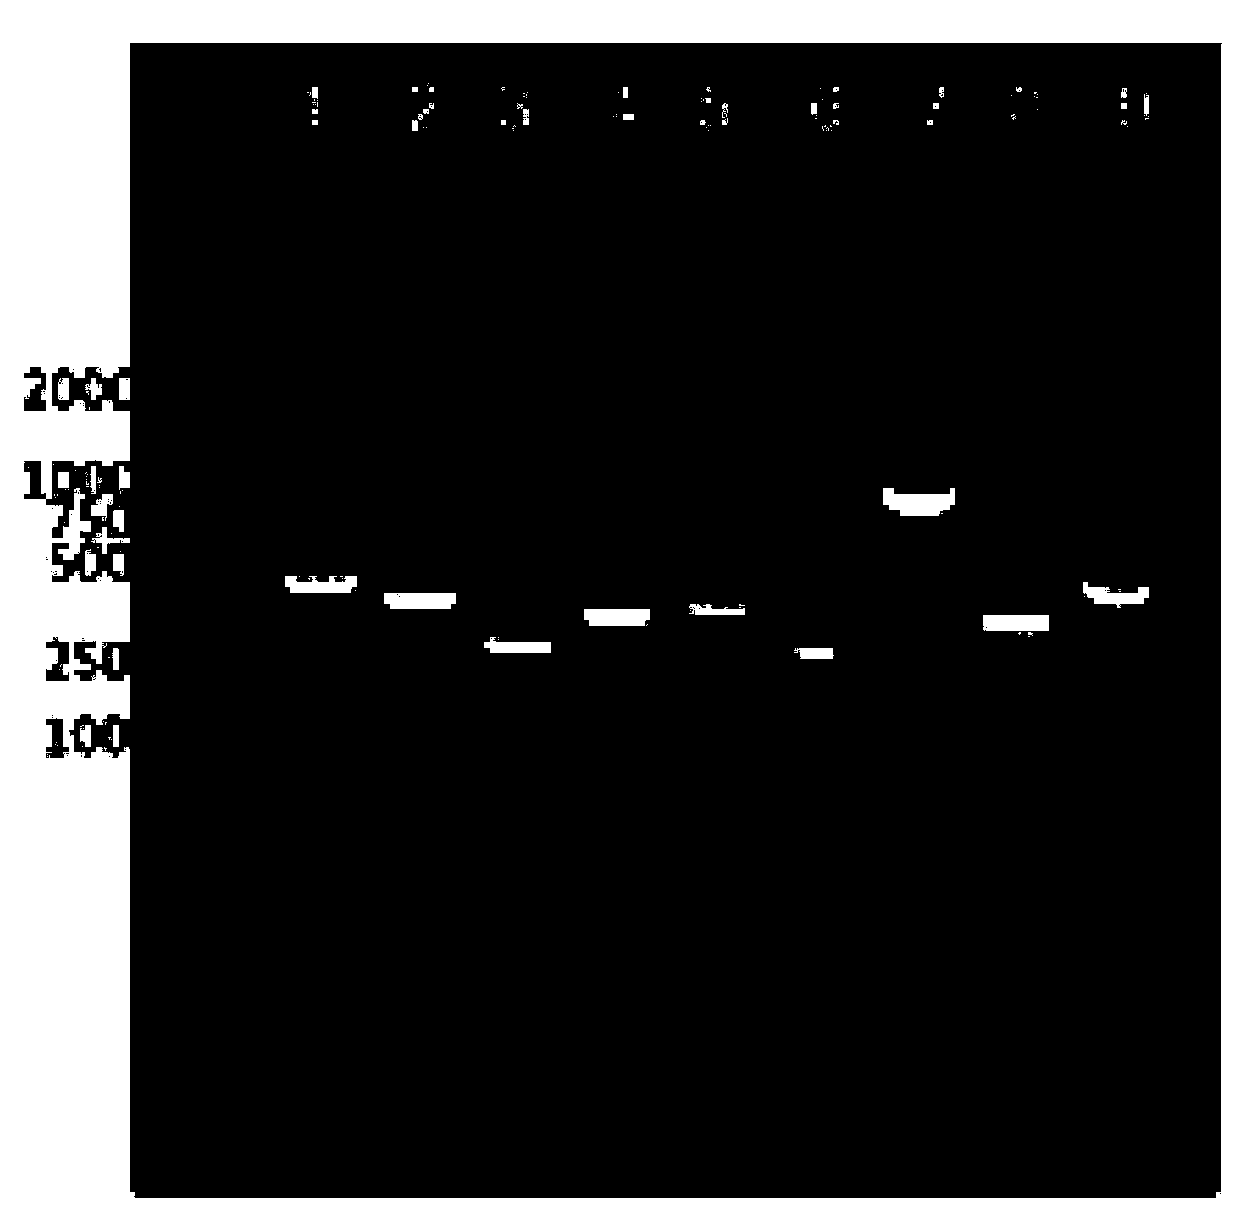 Enzymatic visual oligonucleotide chip for synchronous detection of four porcine diarrhea viruses, and application of oligonucleotide chip